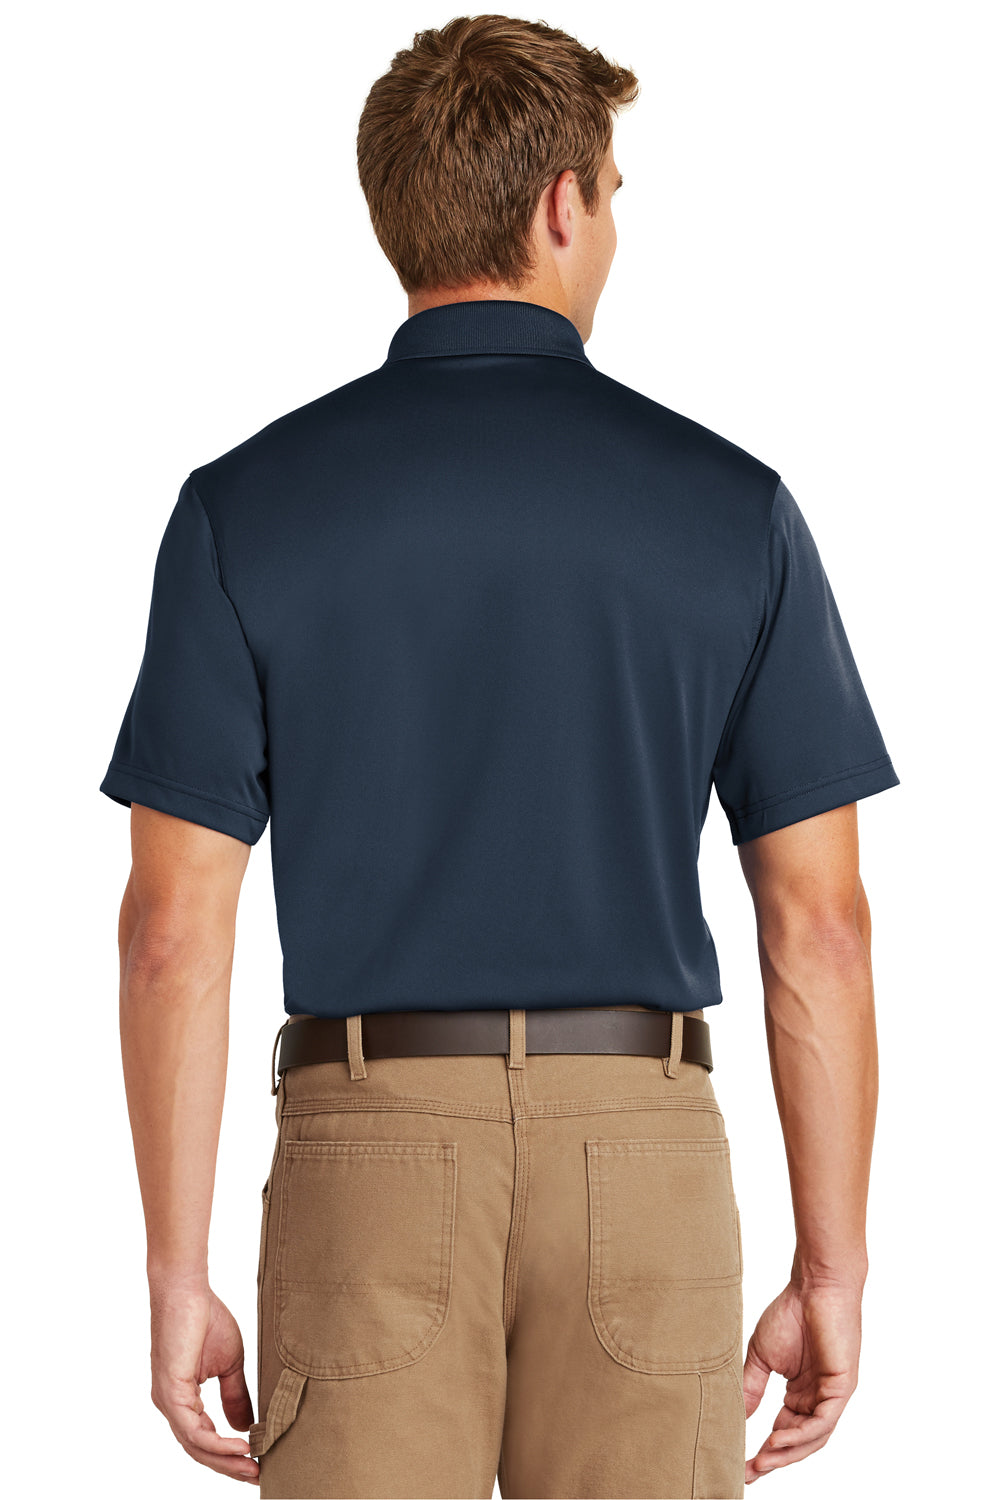 CornerStone CS412 Mens Select Moisture Wicking Short Sleeve Polo Shirt Navy Blue Back